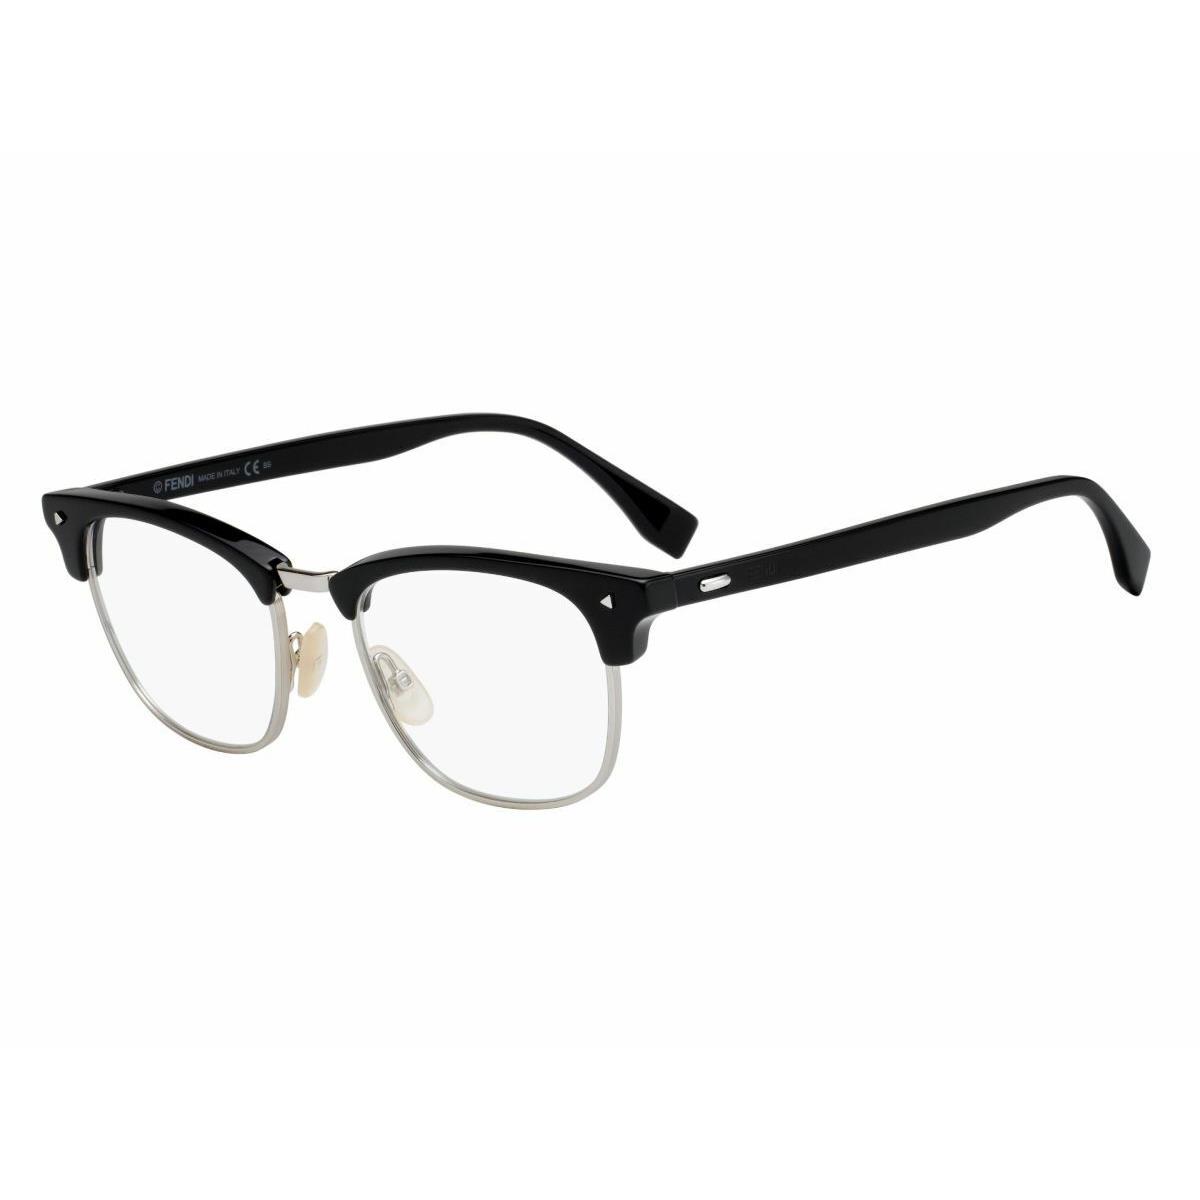 Fendi Eyeglasses FFM0006 80700 50mm Black / Demo Lens - Black, Frame: Black